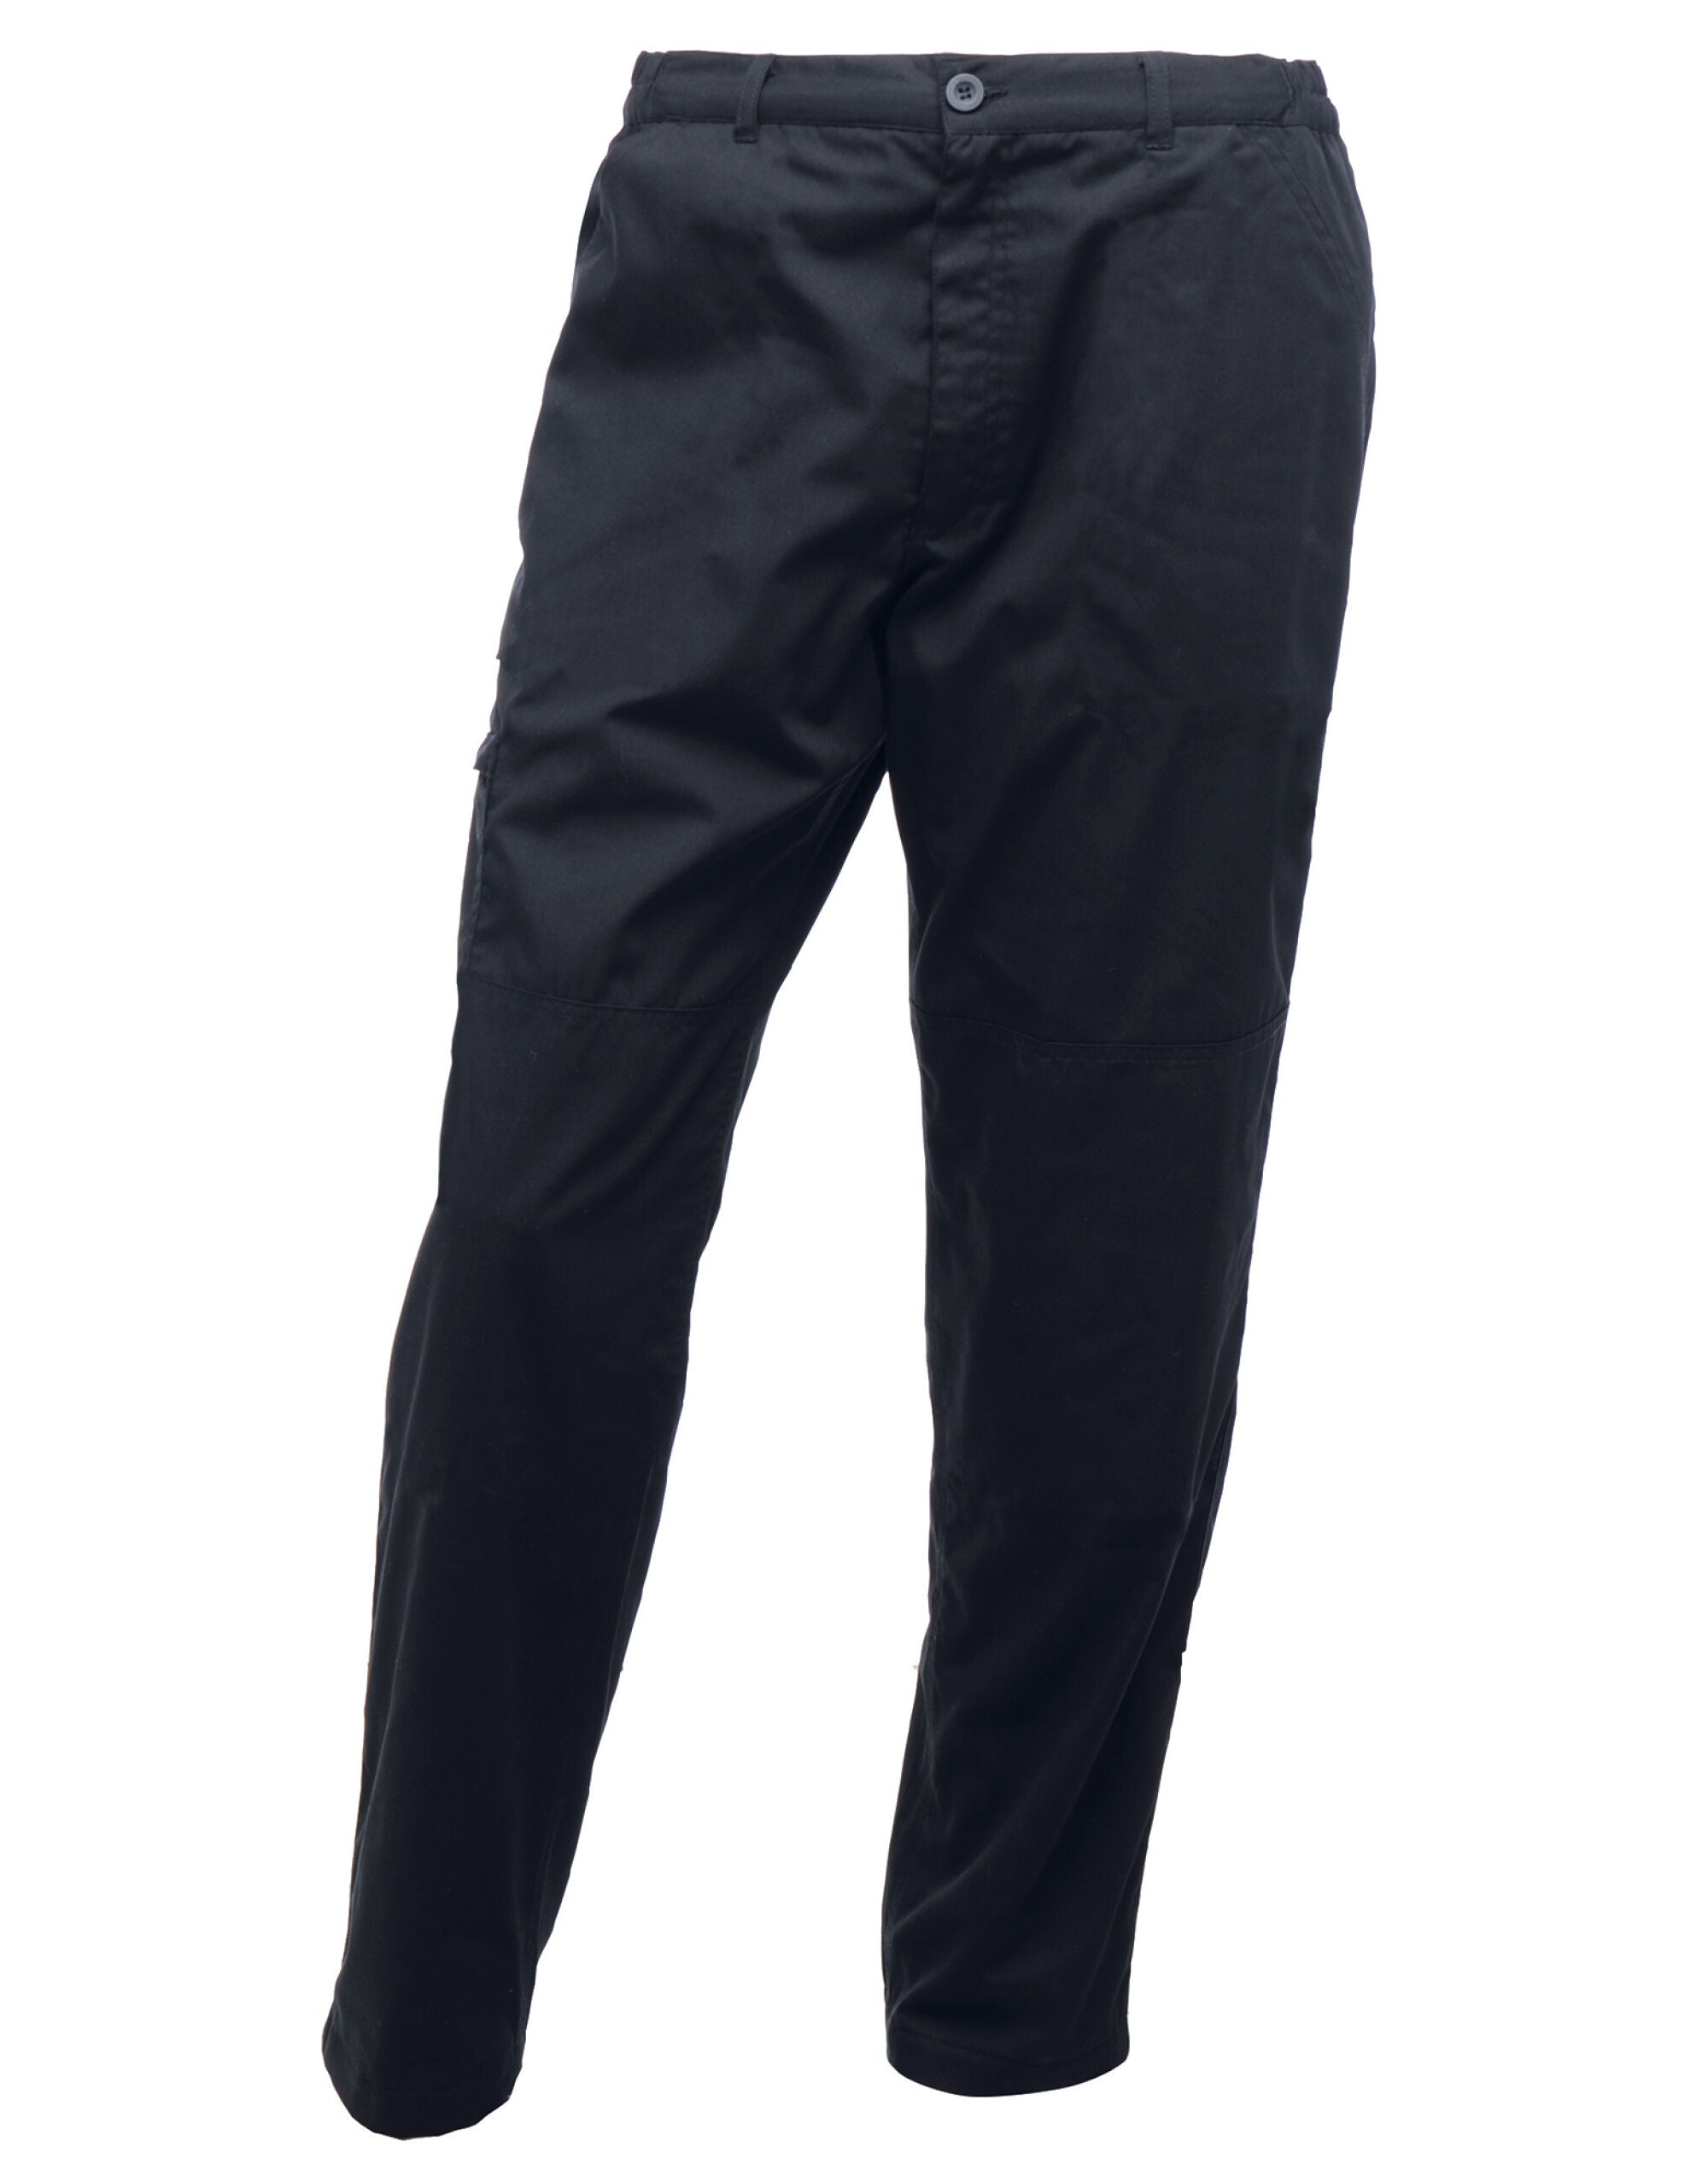 REGATTA PROFESSIONAL Pro Cargo Trousers (L) Water repellent coating (TRJ500L)